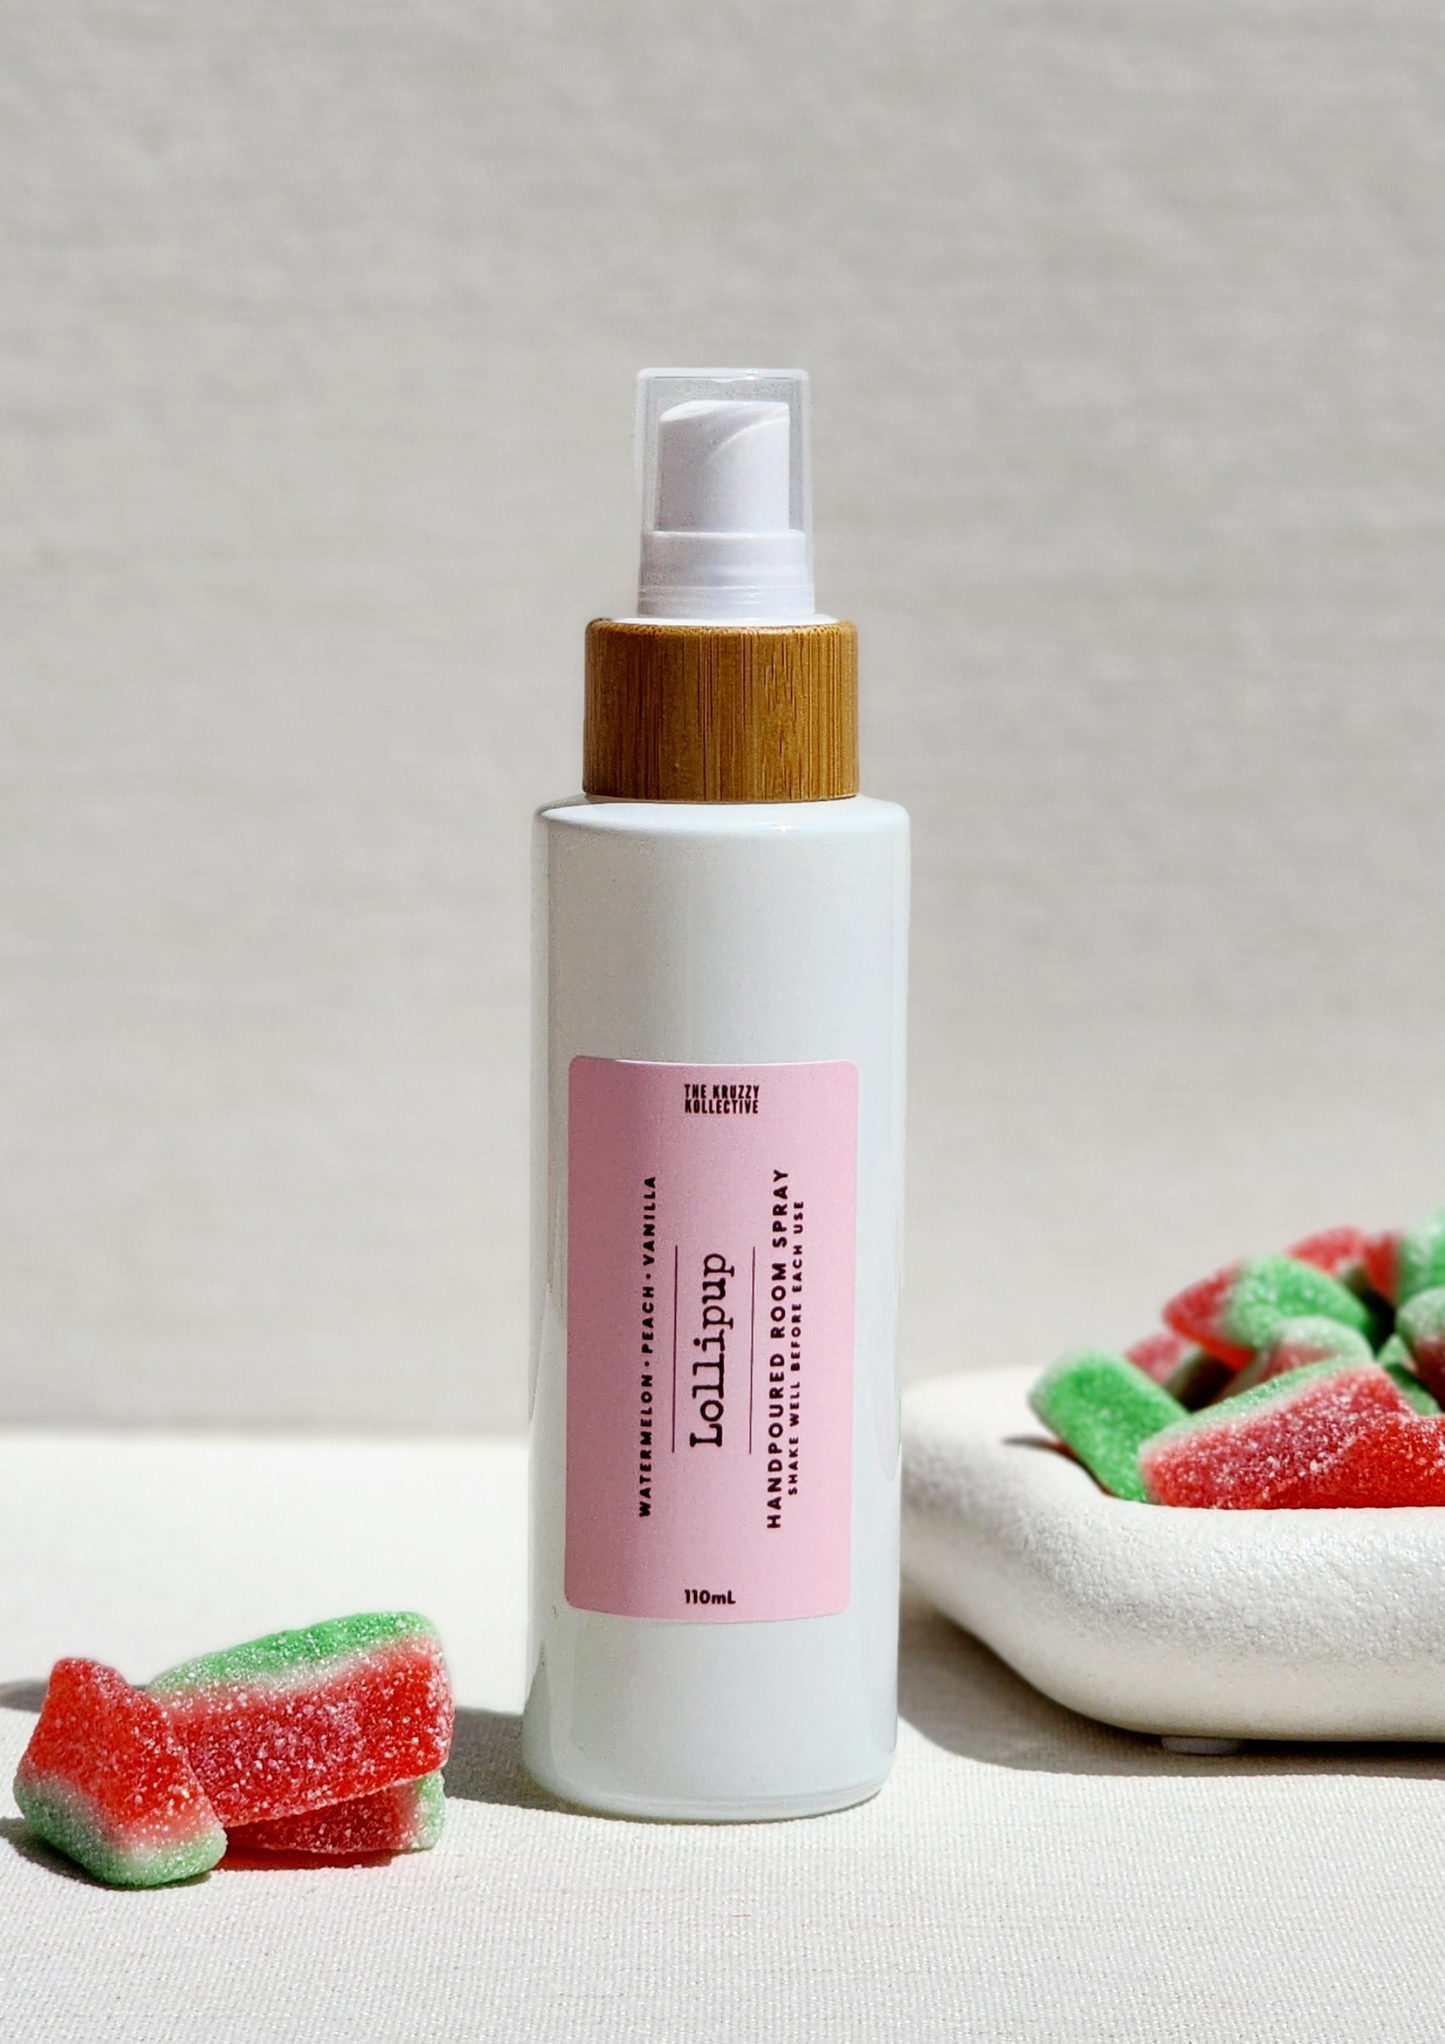 home fragrance spray odor eliminators eco friendly room freshener air freshener watermelon vanilla